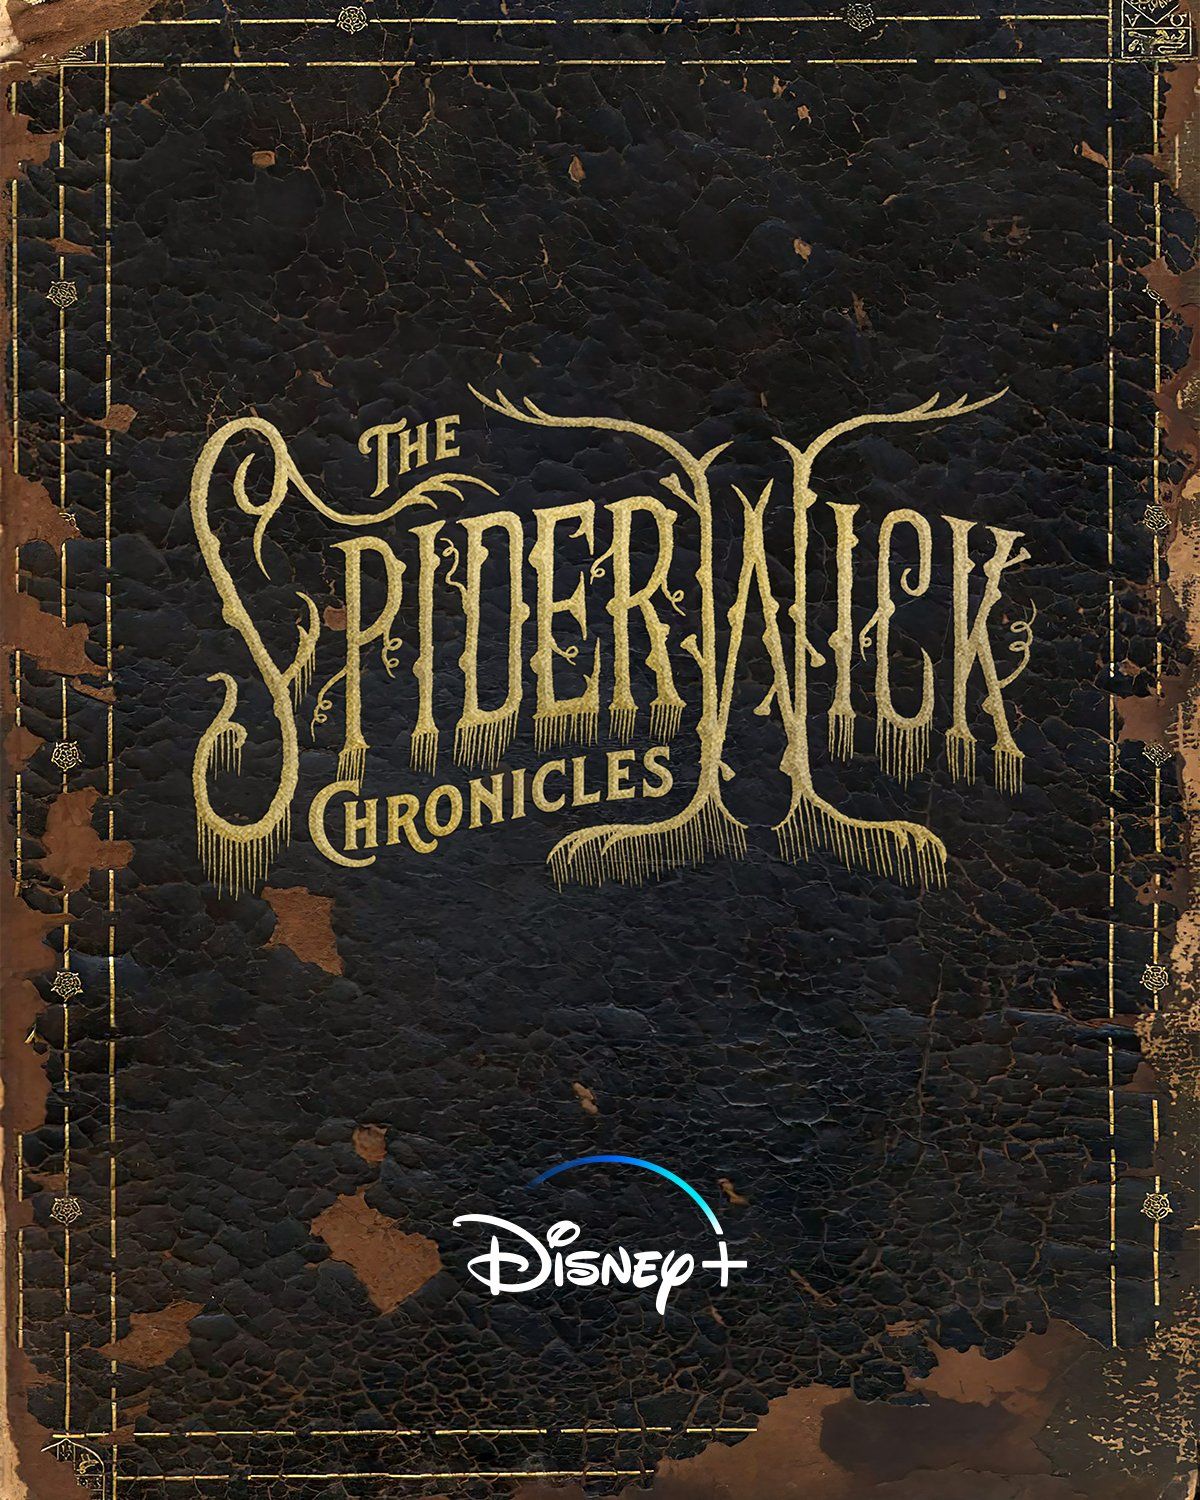 Spiderwick Chronicles Show In Development At Disney